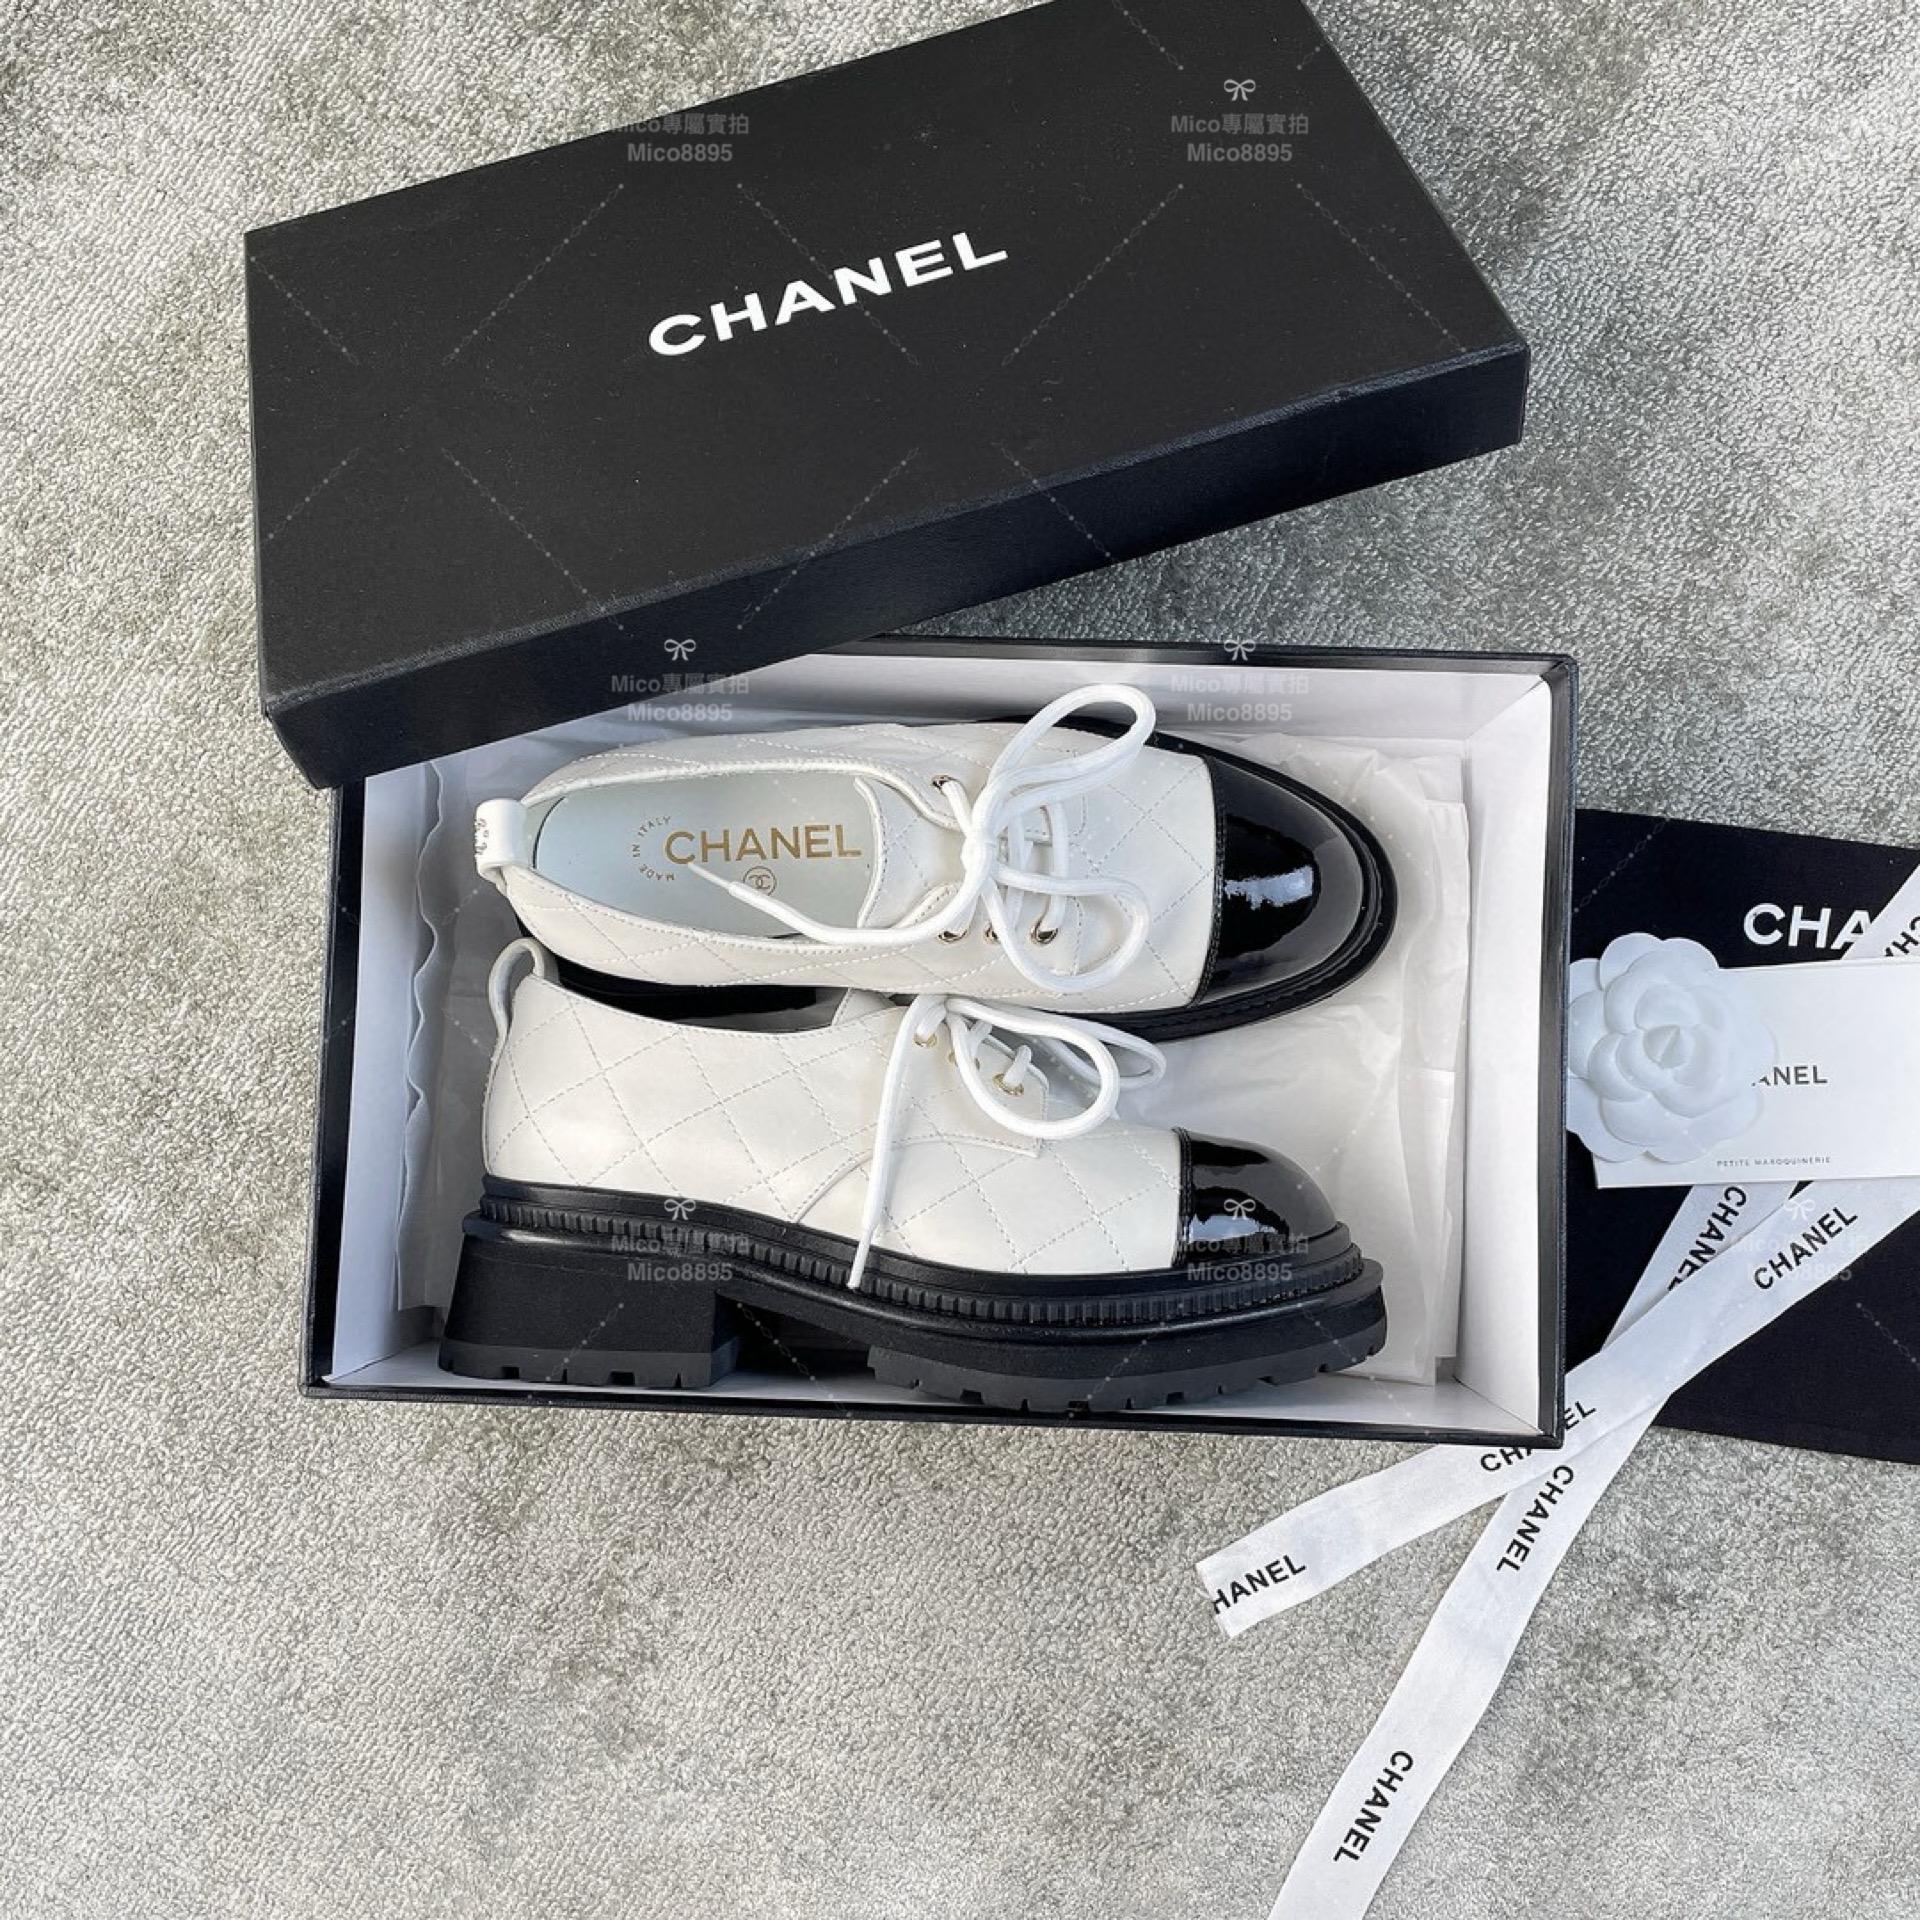 Chanel 經典繫帶 白色 厚底樂福鞋/紳士鞋/ 英倫風格 SIZE 35-39(可訂製40）